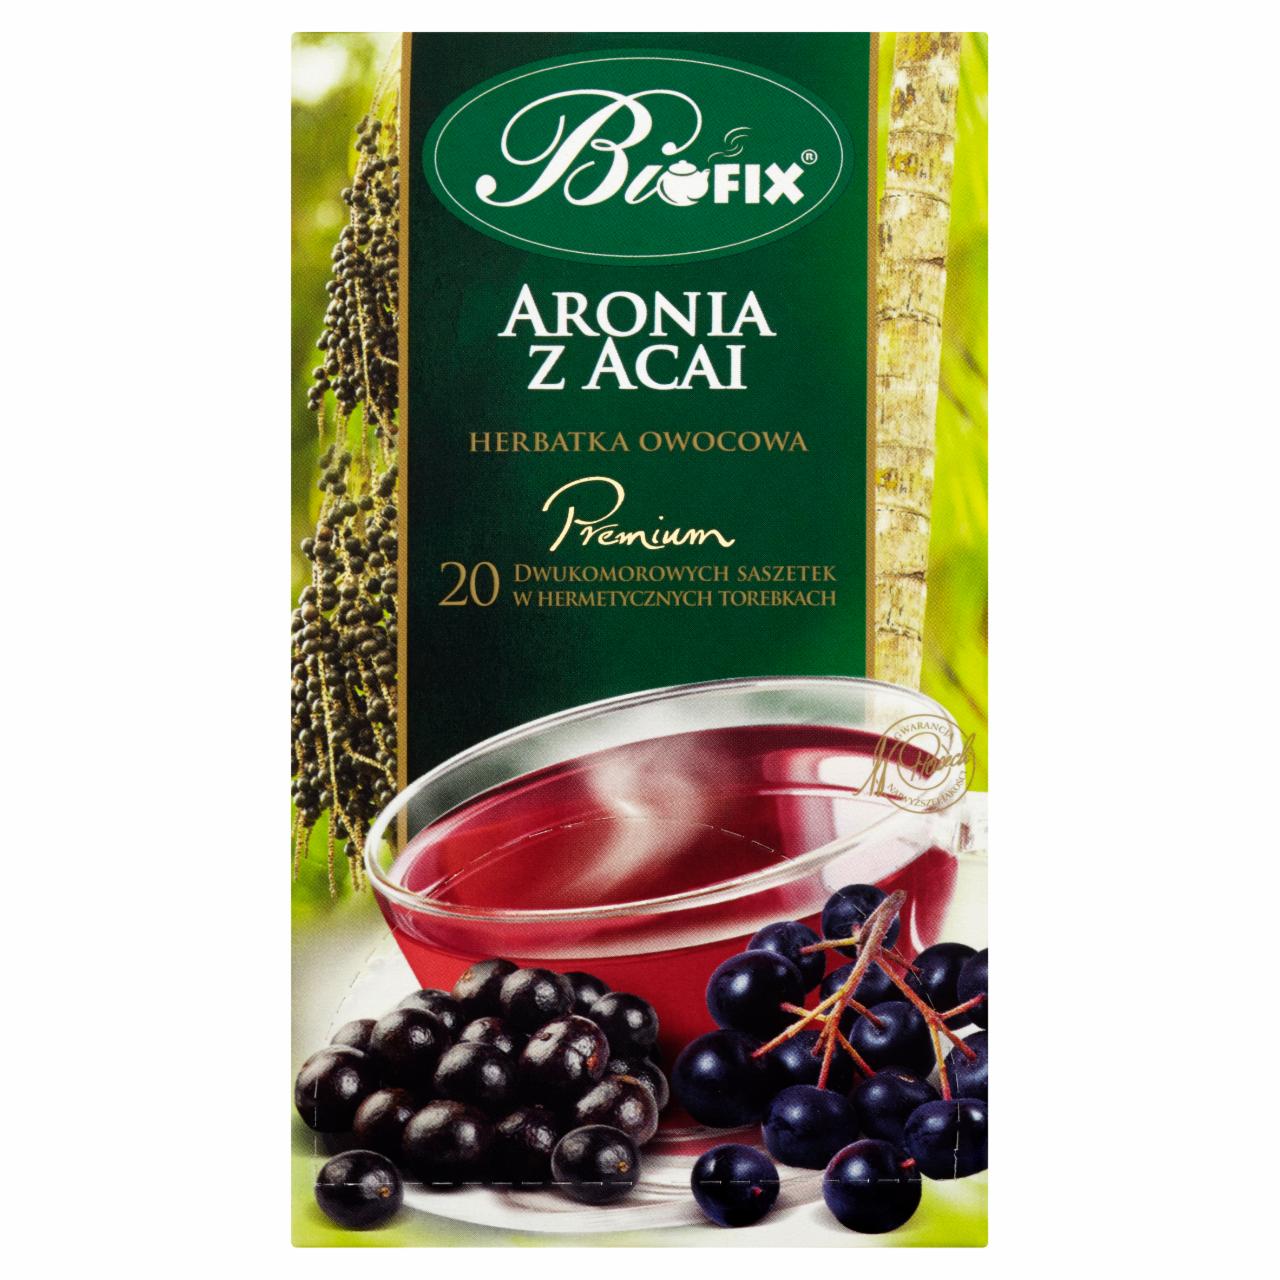 Zdjęcia - Bifix Premium aronia z acai Herbatka owocowa 40 g (20 saszetek)